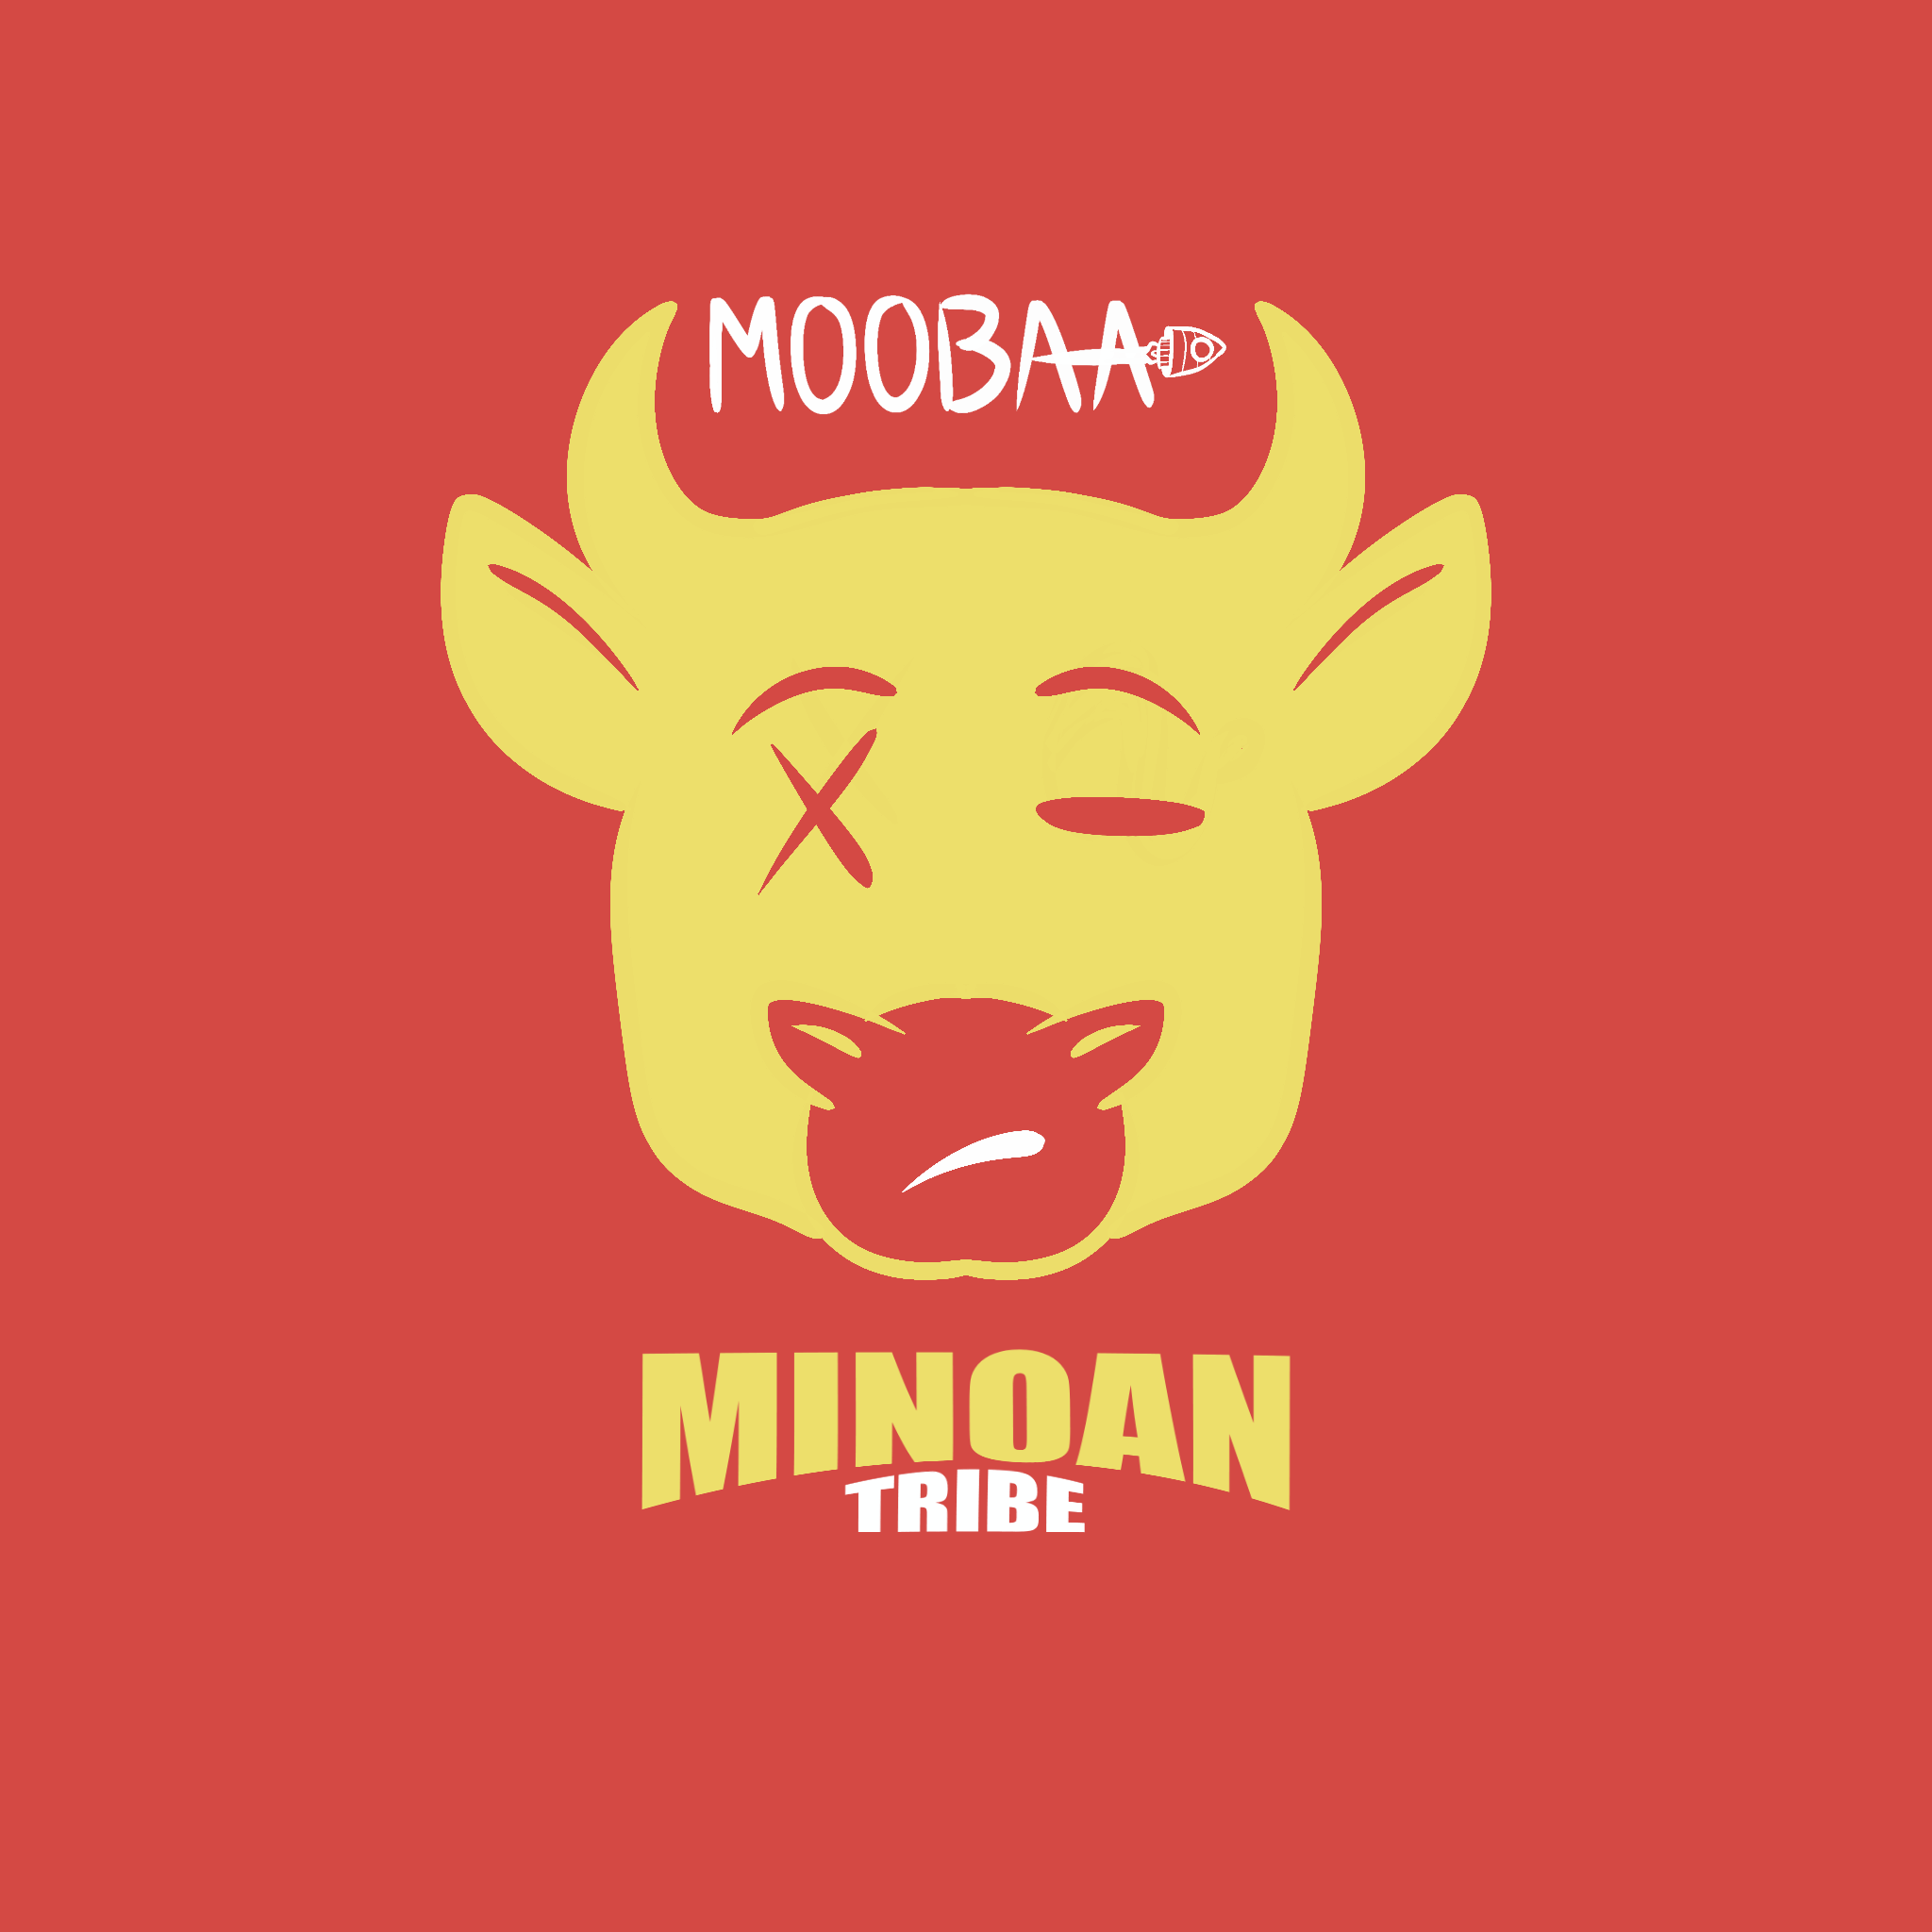 Minoans of MooBaa